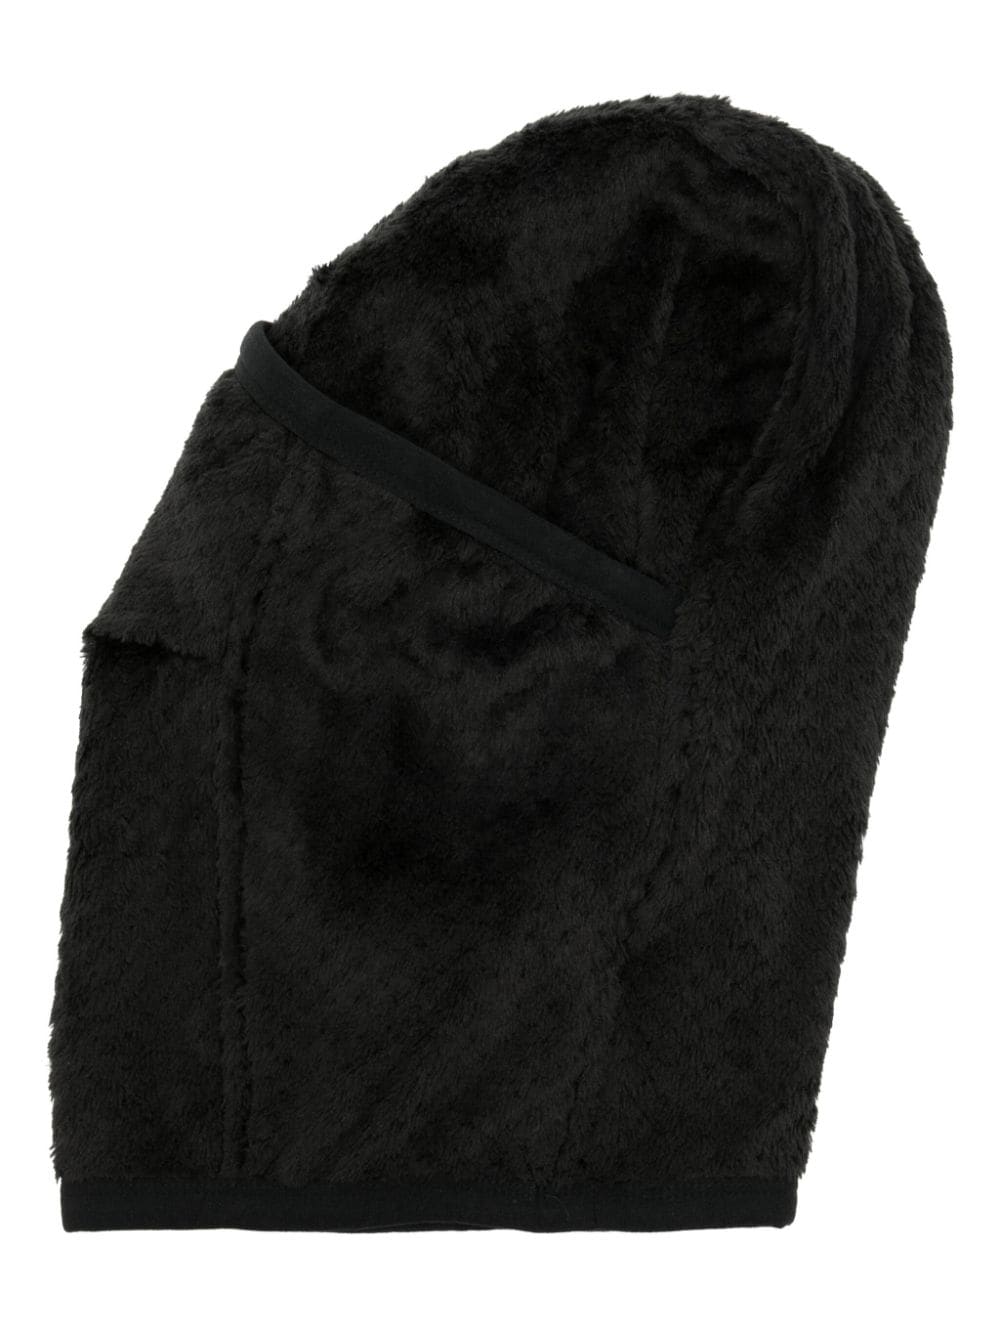 Maharishi Fleece bivakmuts Zwart